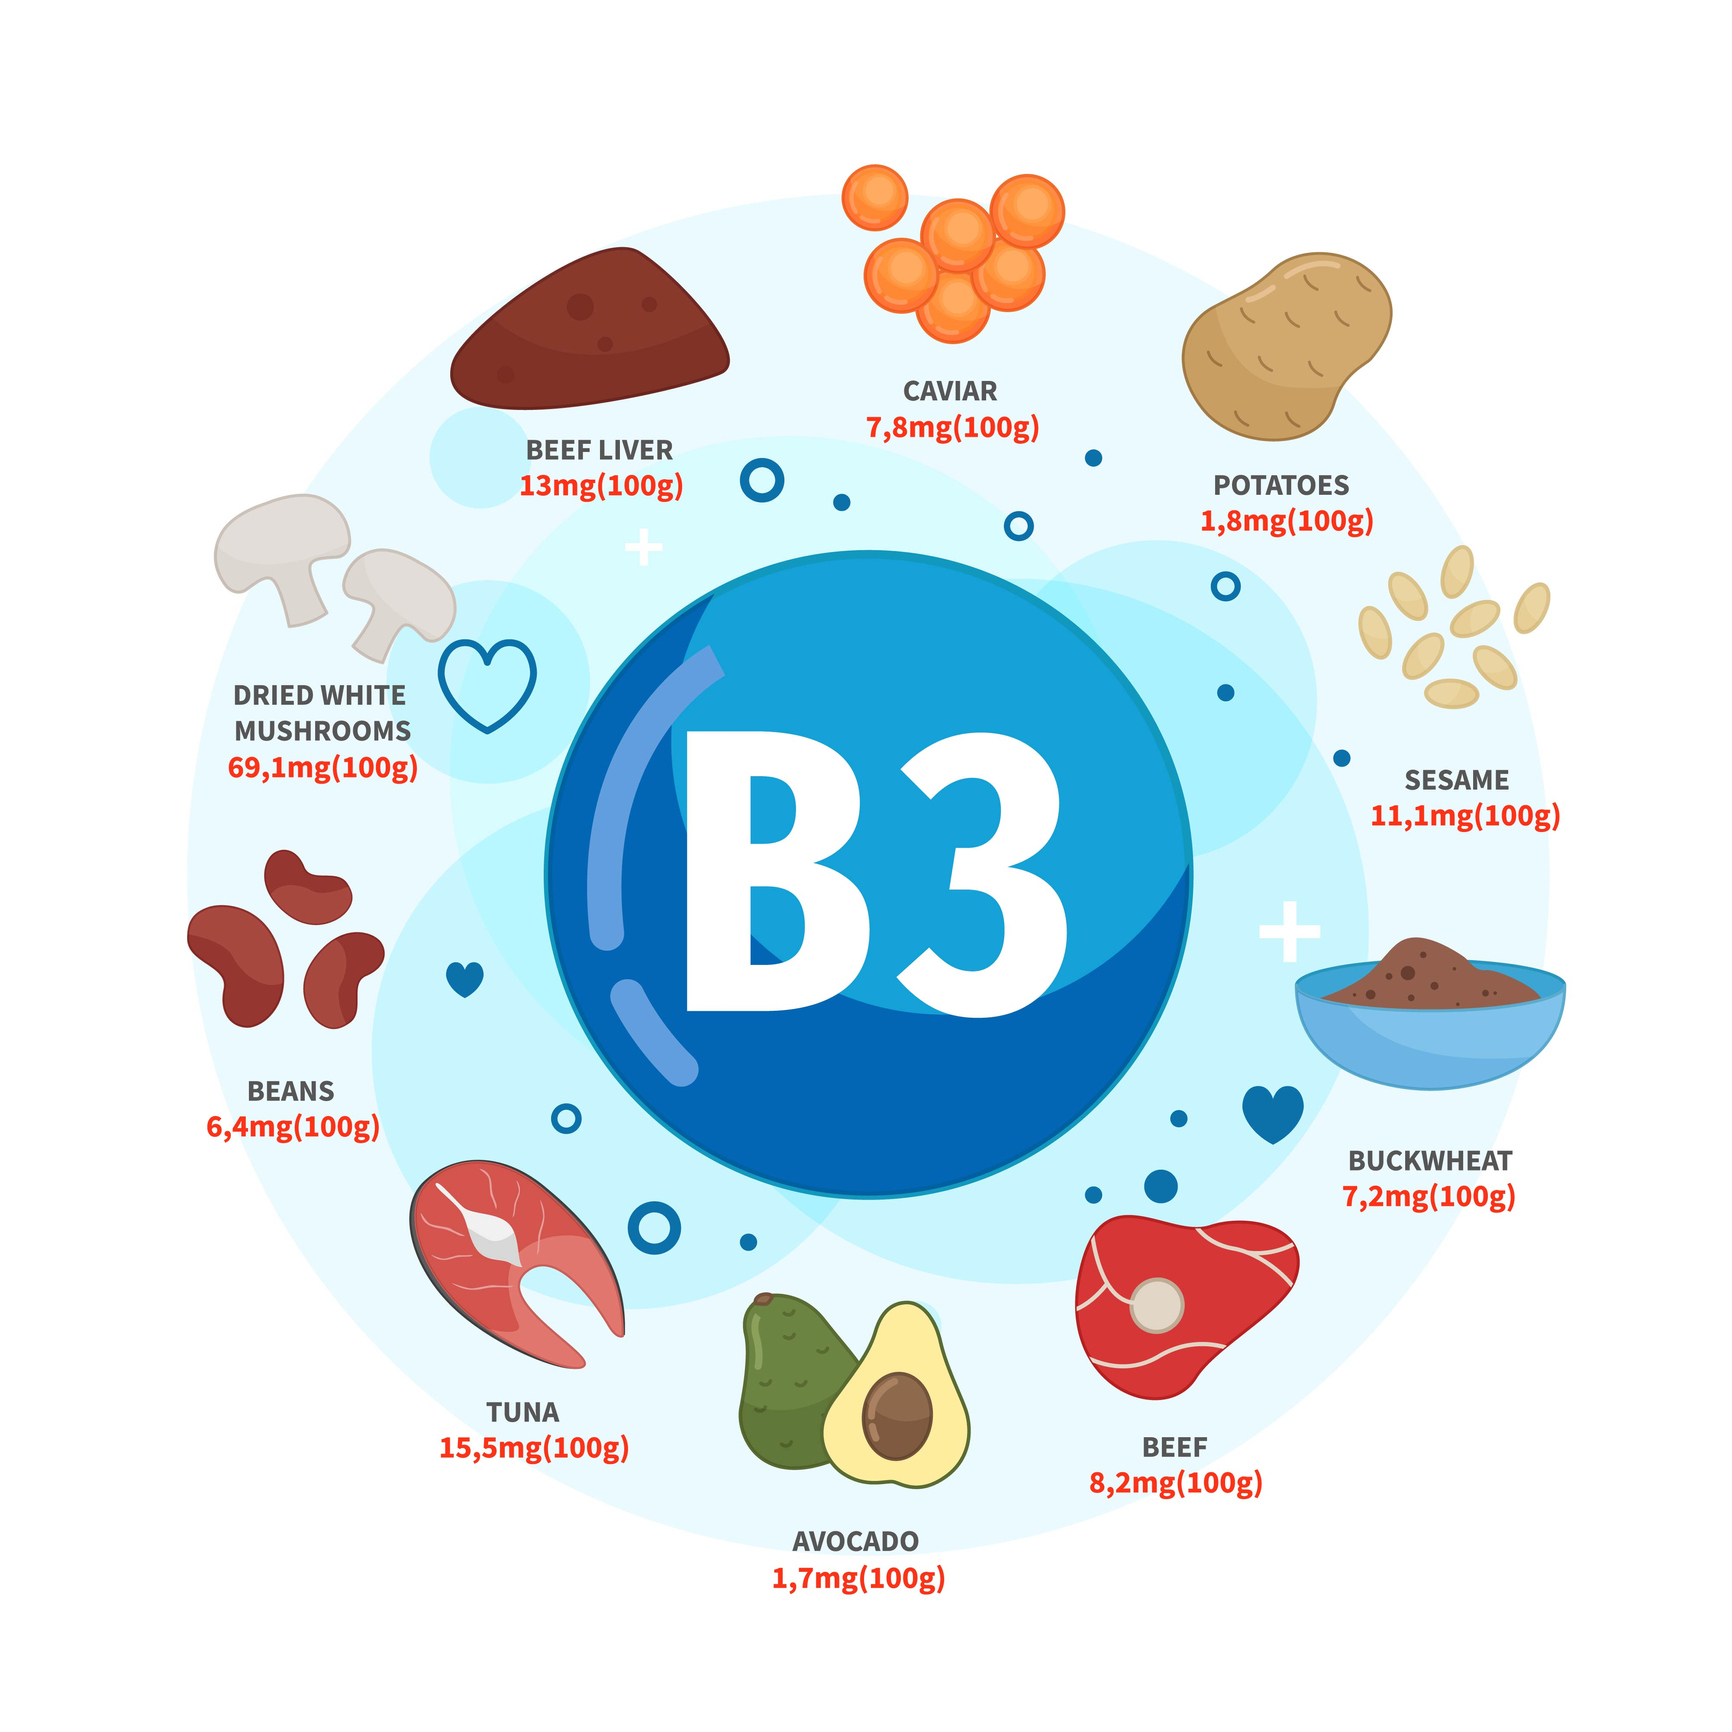 Sources of vitamin B3 are caviar, potatoes, sesame seeds, buckwheat, beef, avocado, tuna, beans, dried white mushrooms, beef liver. 